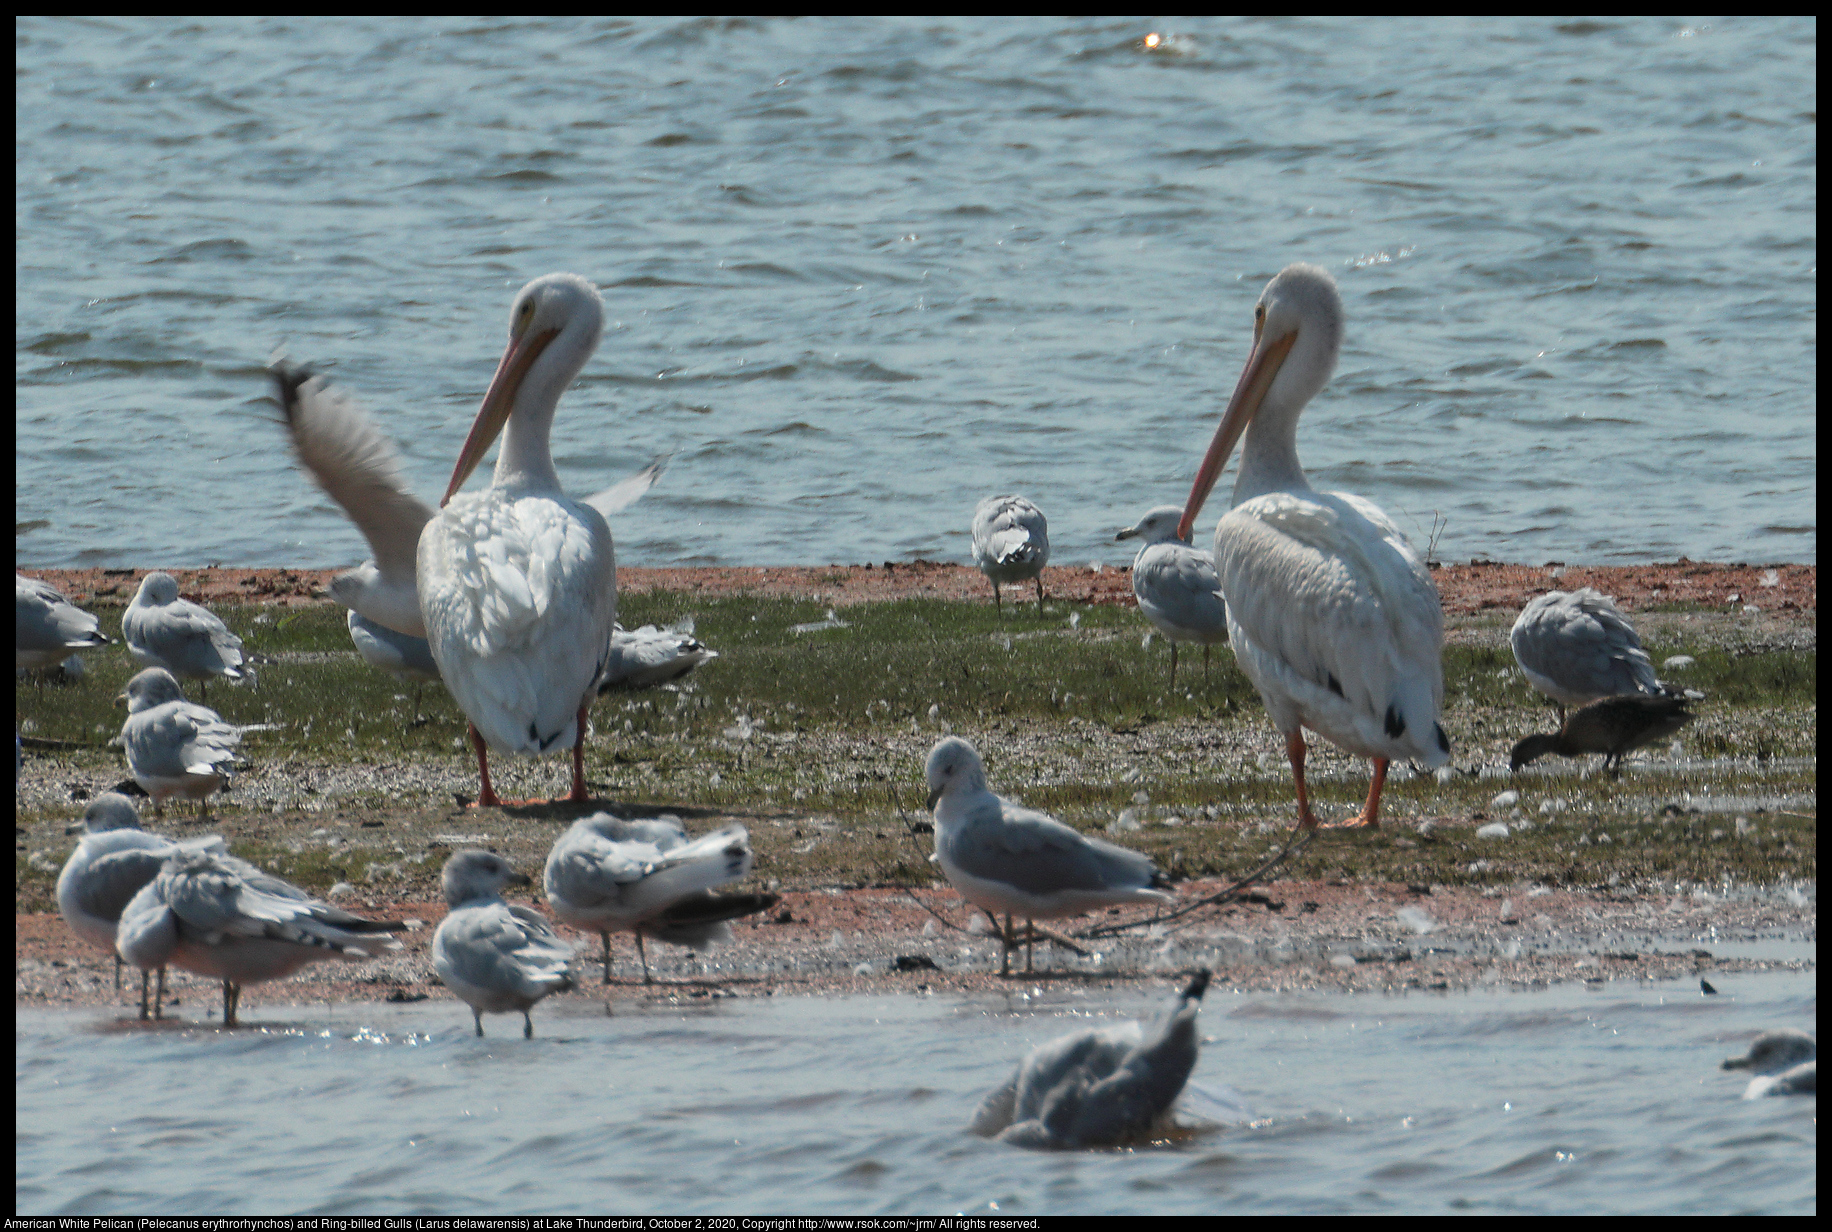 American White Pelican (Pelecanus erythrorhynchos) and Ring-billed Gulls (Larus delawarensis) at Lake Thunderbird, October 2, 2020